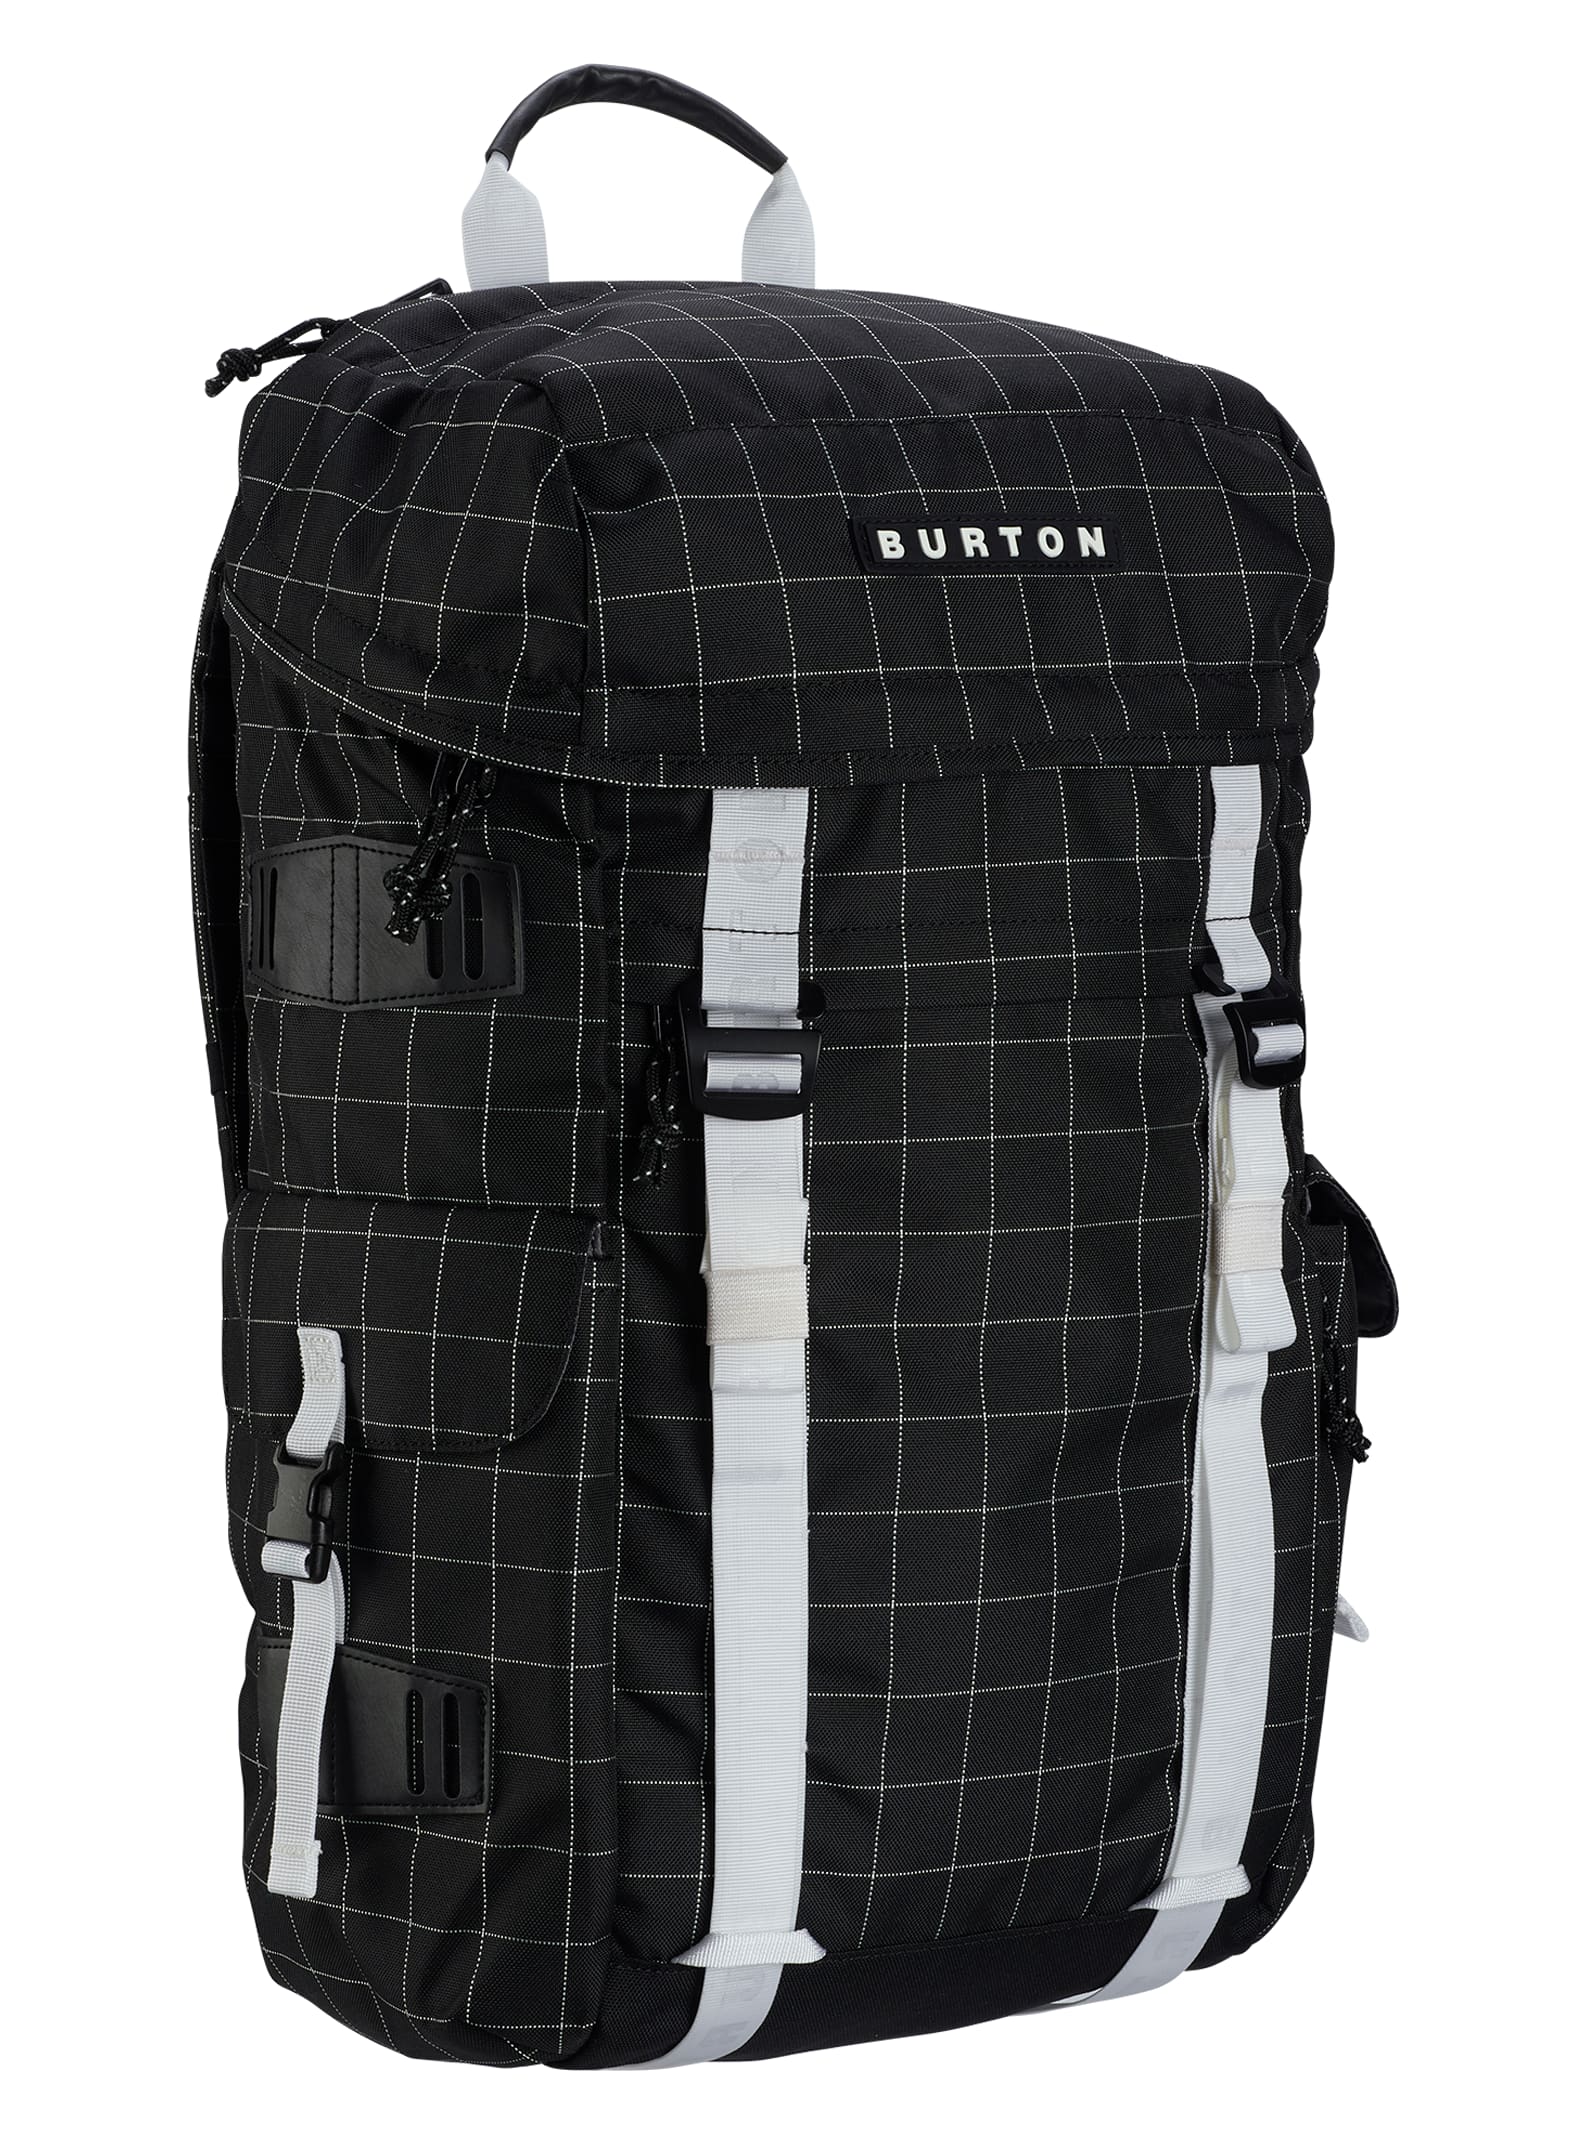 Burton Annex 28L Backpack | Burton.com Winter 2020 US